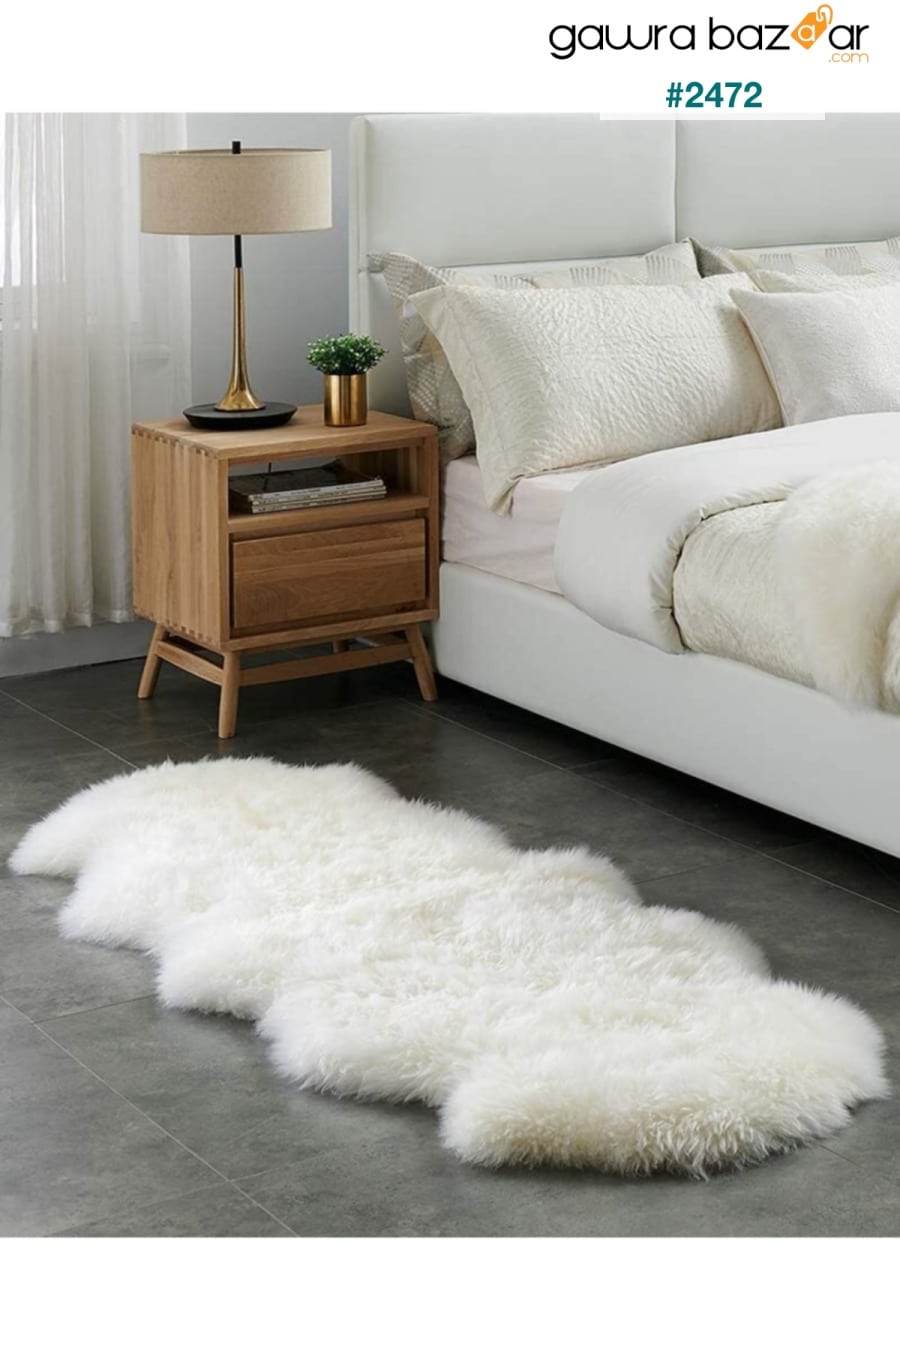 كريم برأس مزدوج من نوع Lamb Post Premium Plush Carpet الناعم ذو الوبر الطويل Napoli Home 0